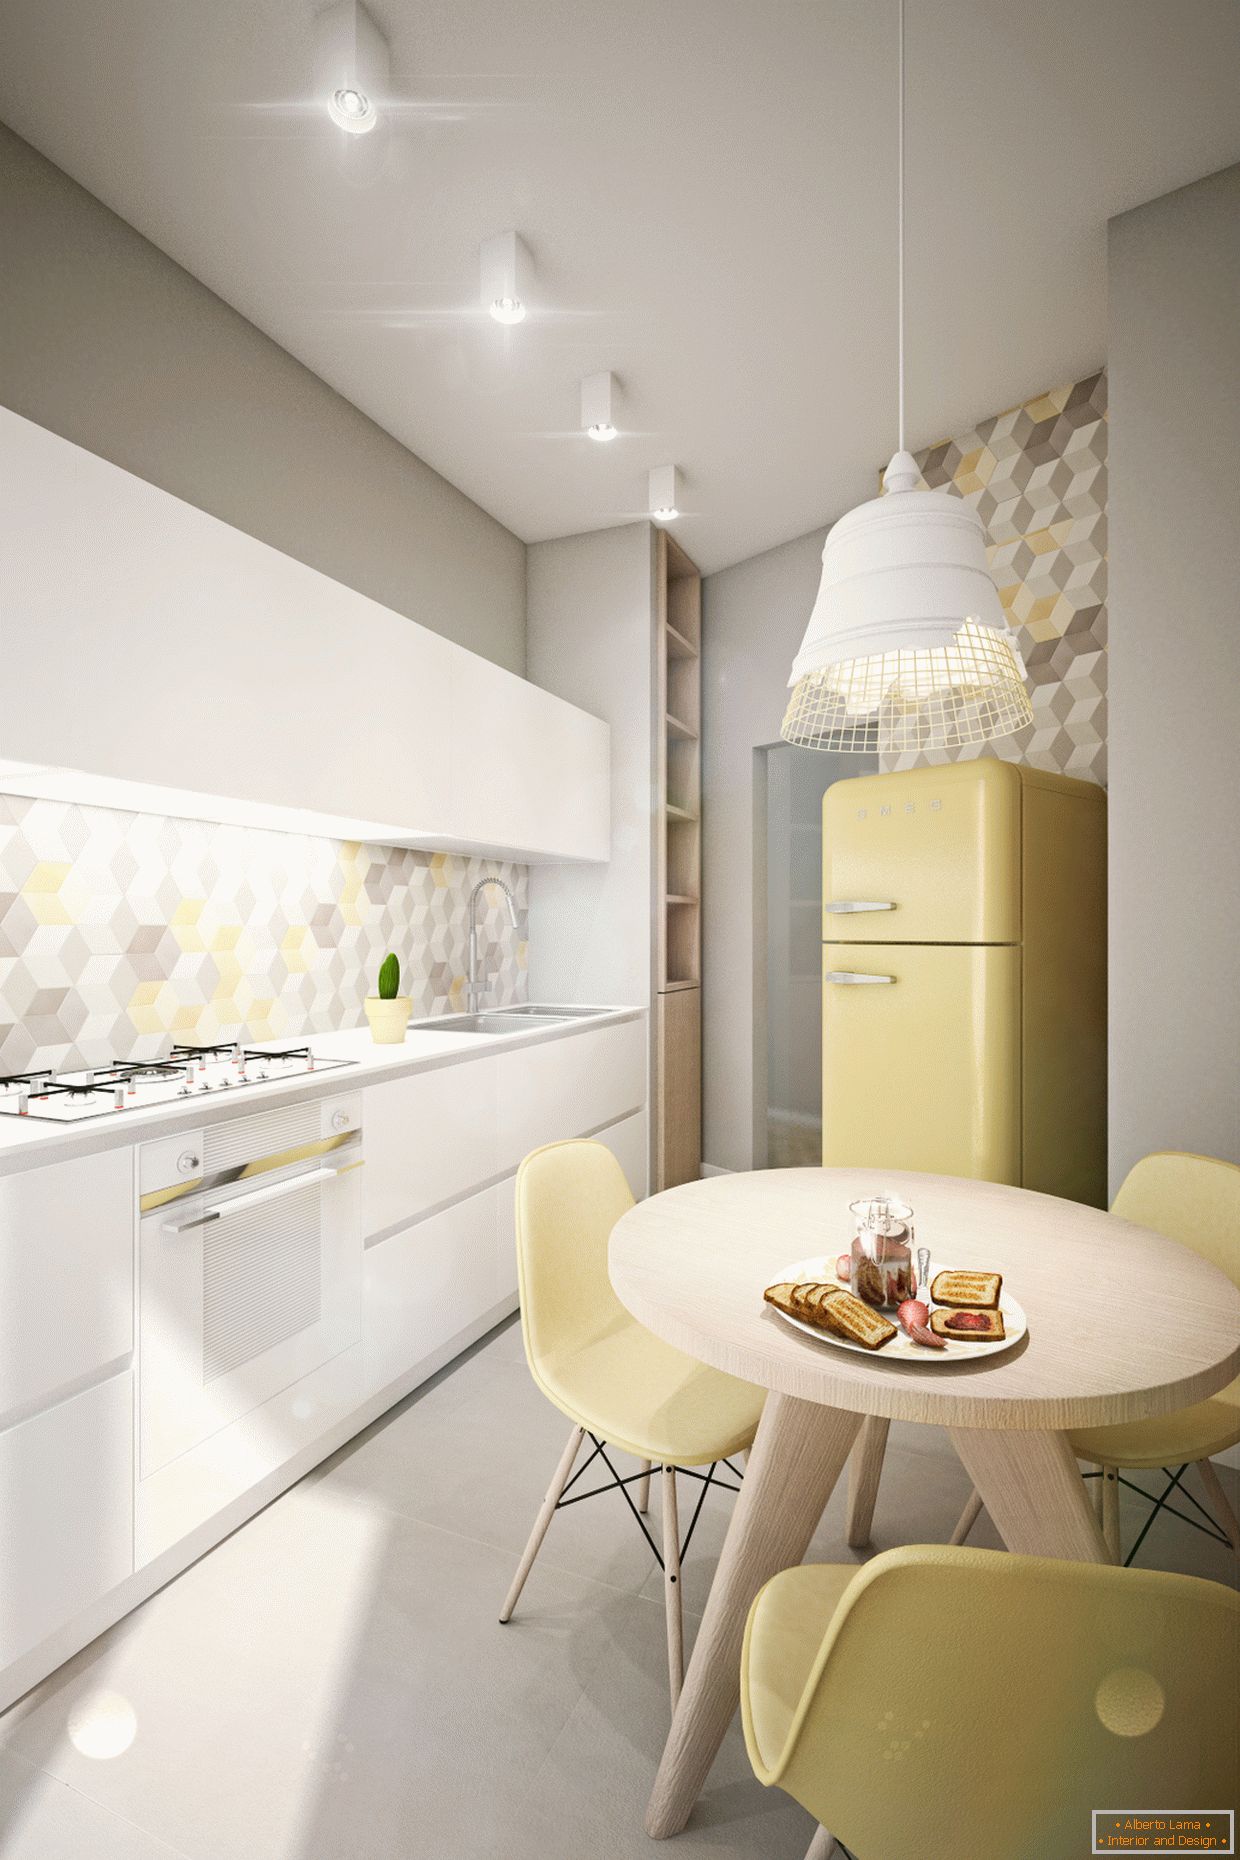 Design apartment in pastel colors: kitchen